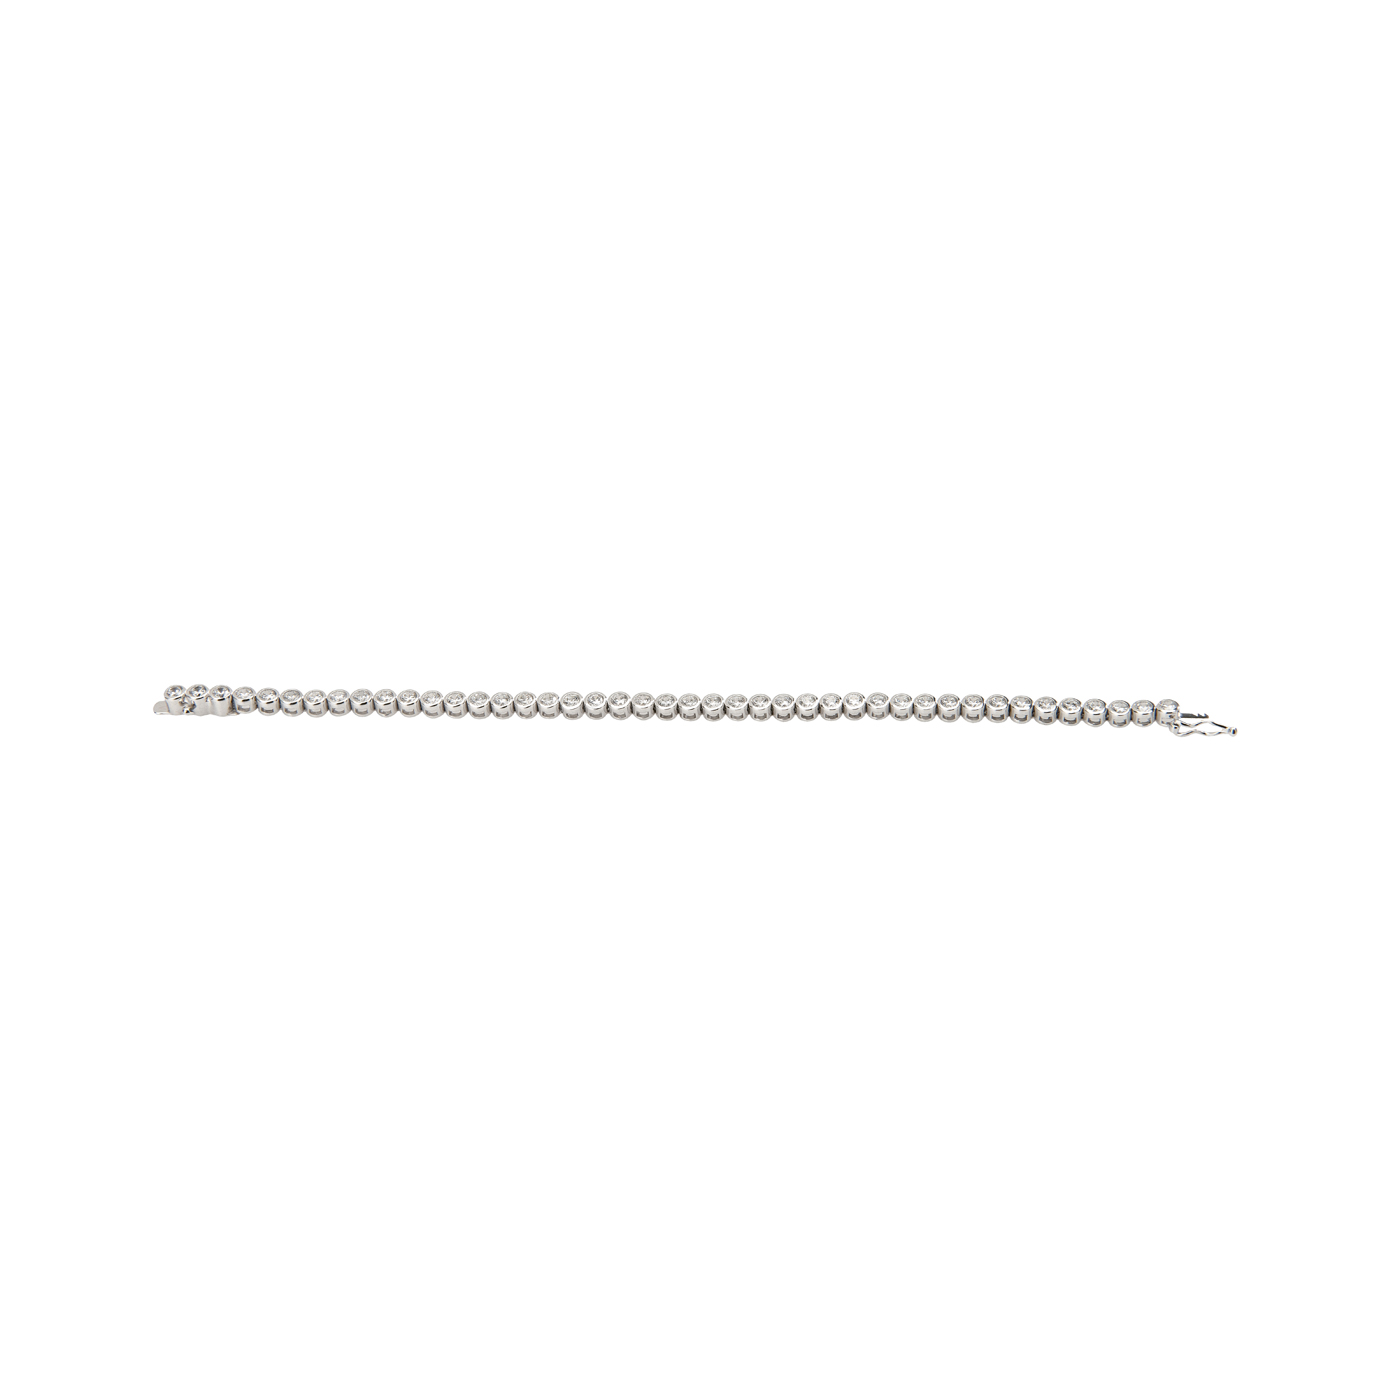 Bracelet, 925Ag Rhodium-Plated, Length 19 cm, with Zirconia - 1 piece